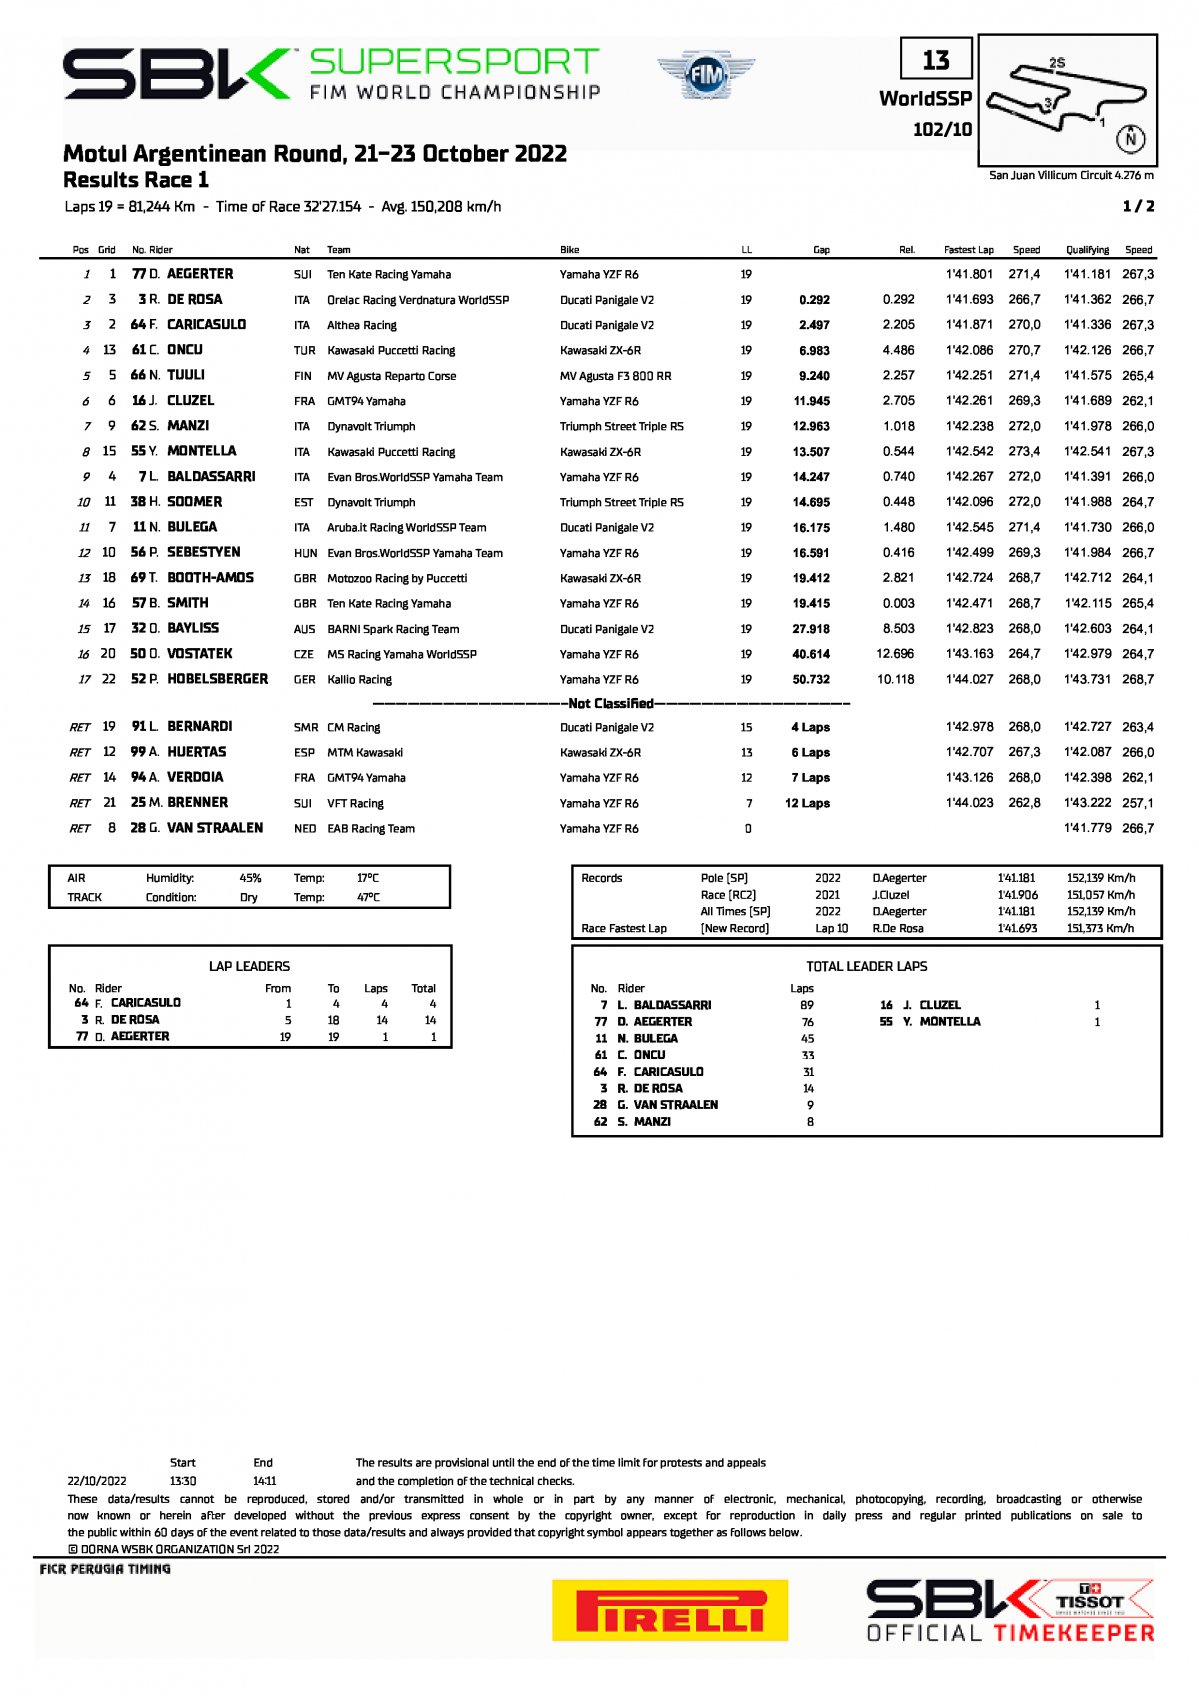 Результаты 1 гонки ARGWorldSBK, World Supersport (22/10/2022)